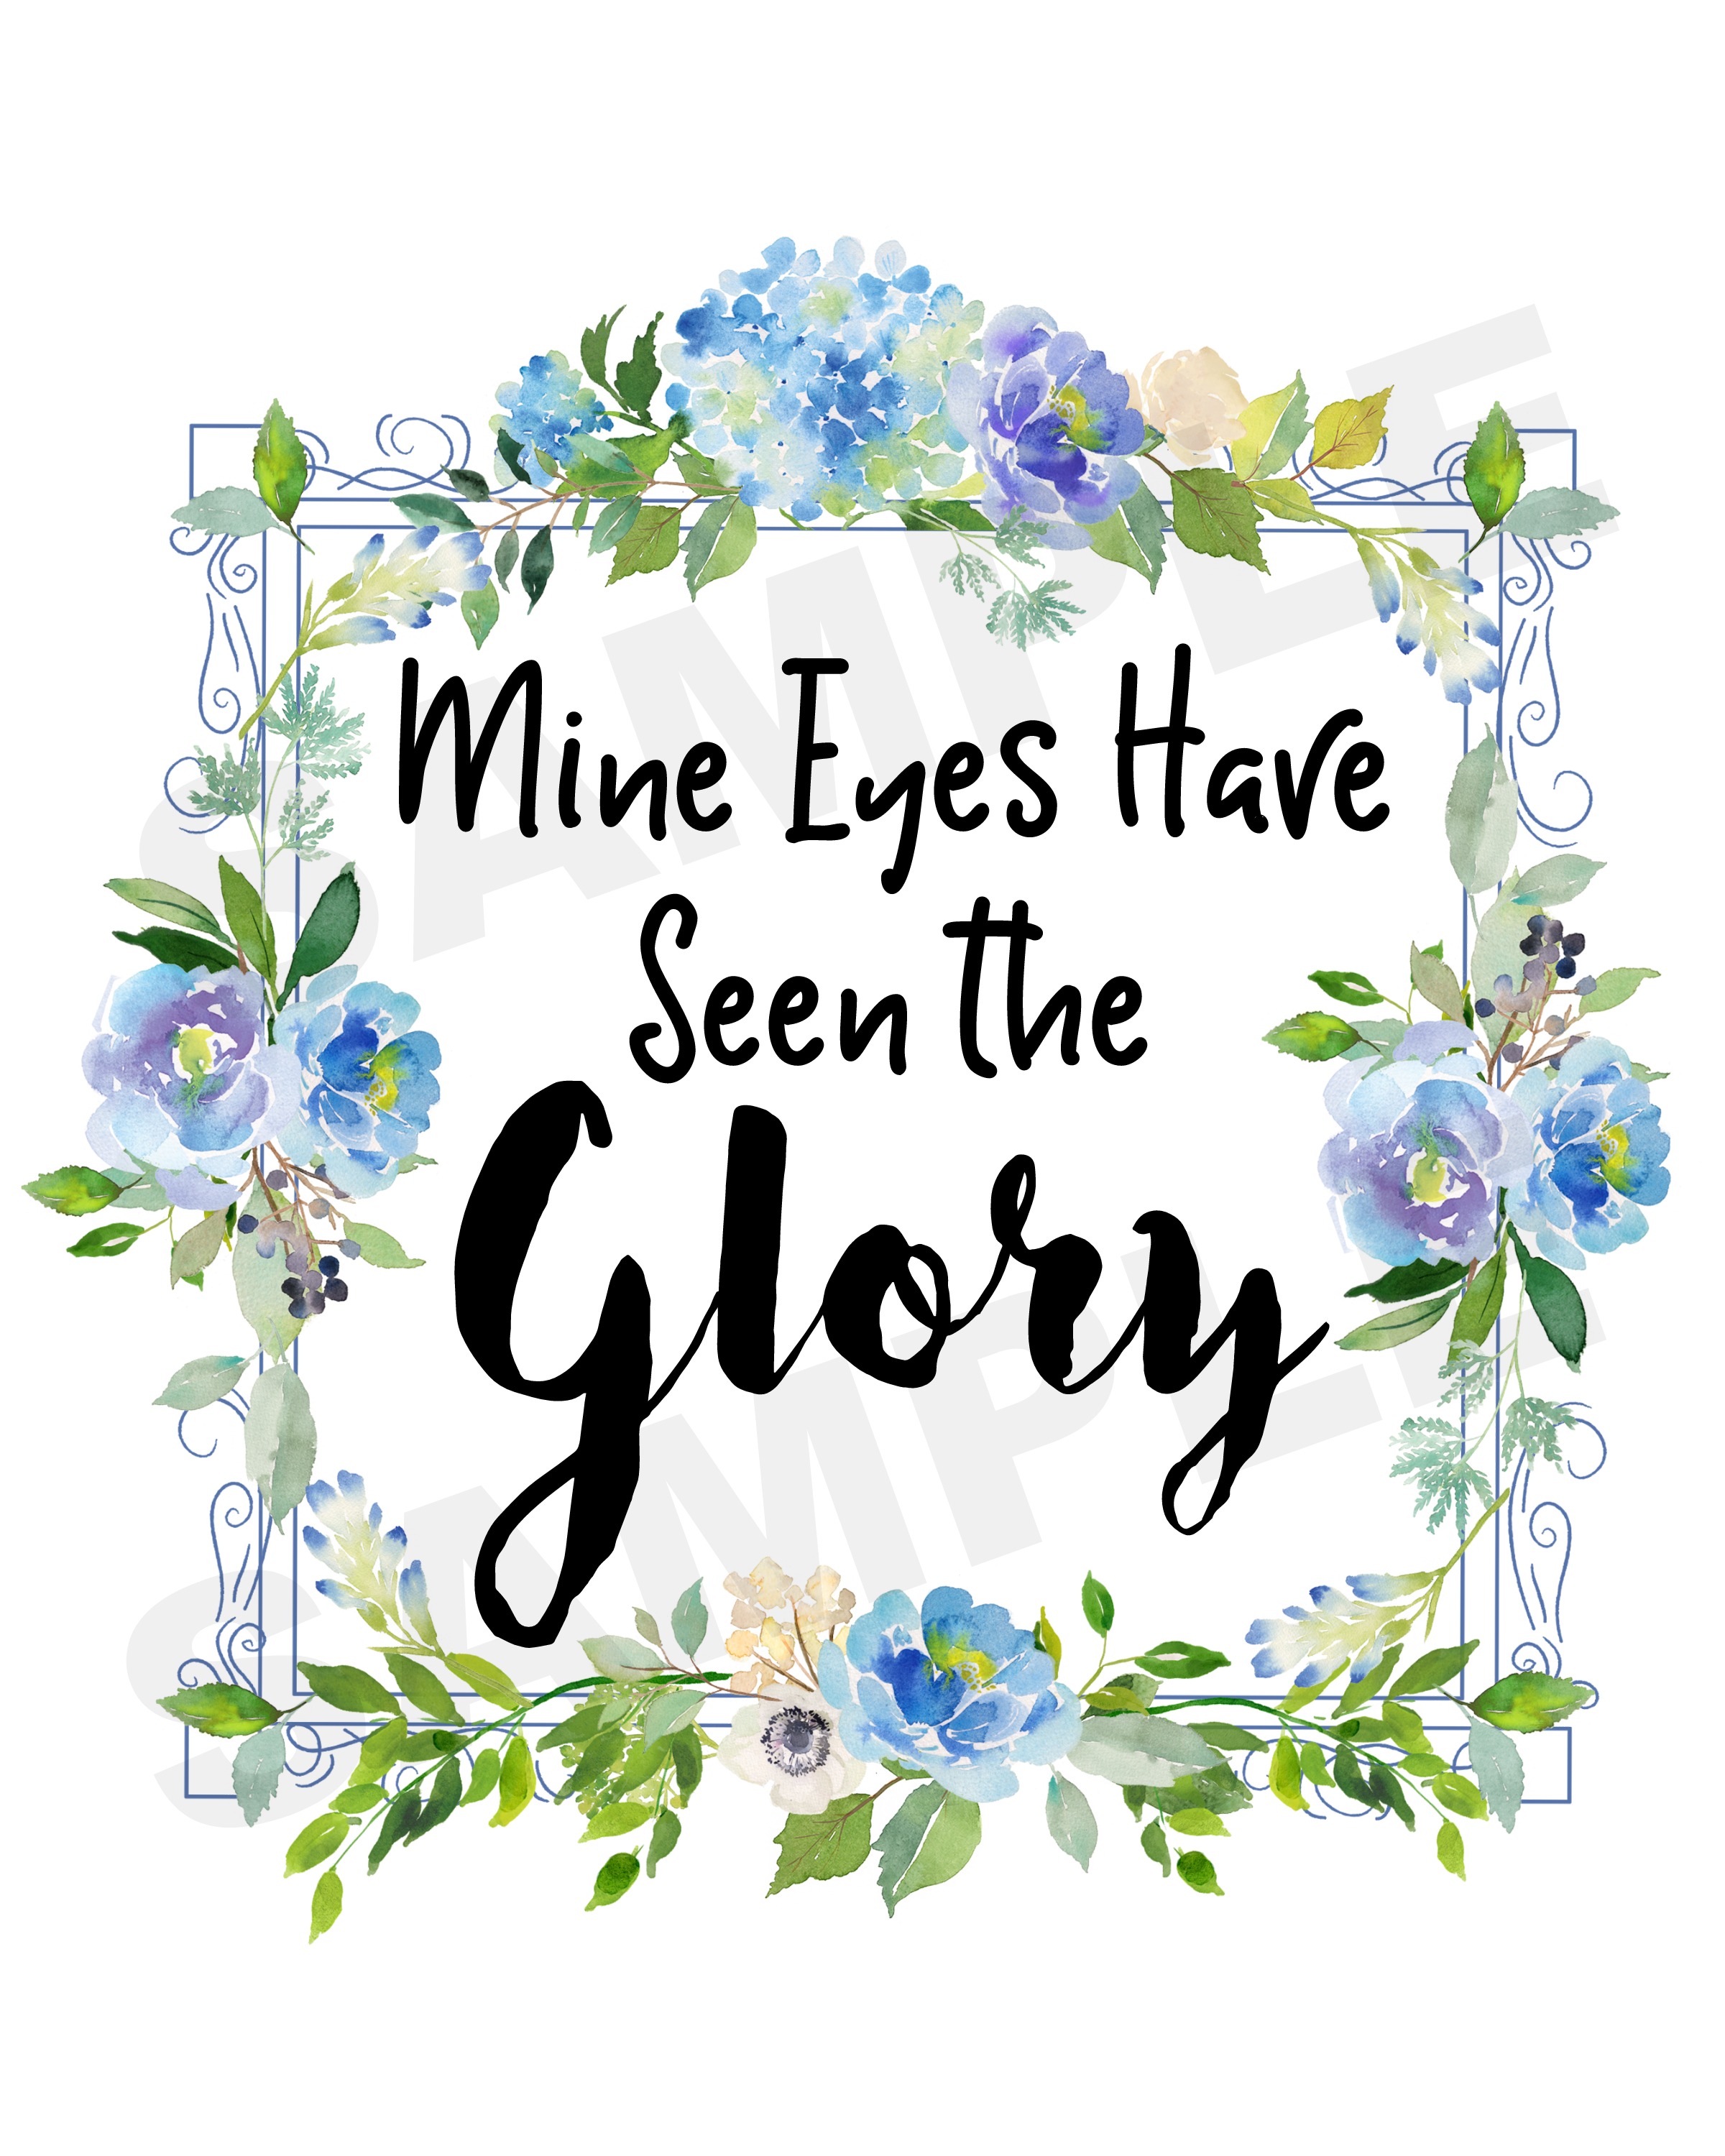 Mine Eyes Have Seen the Glory Gospel Printable | The Everyday Home | www.everydayhomeblog.com